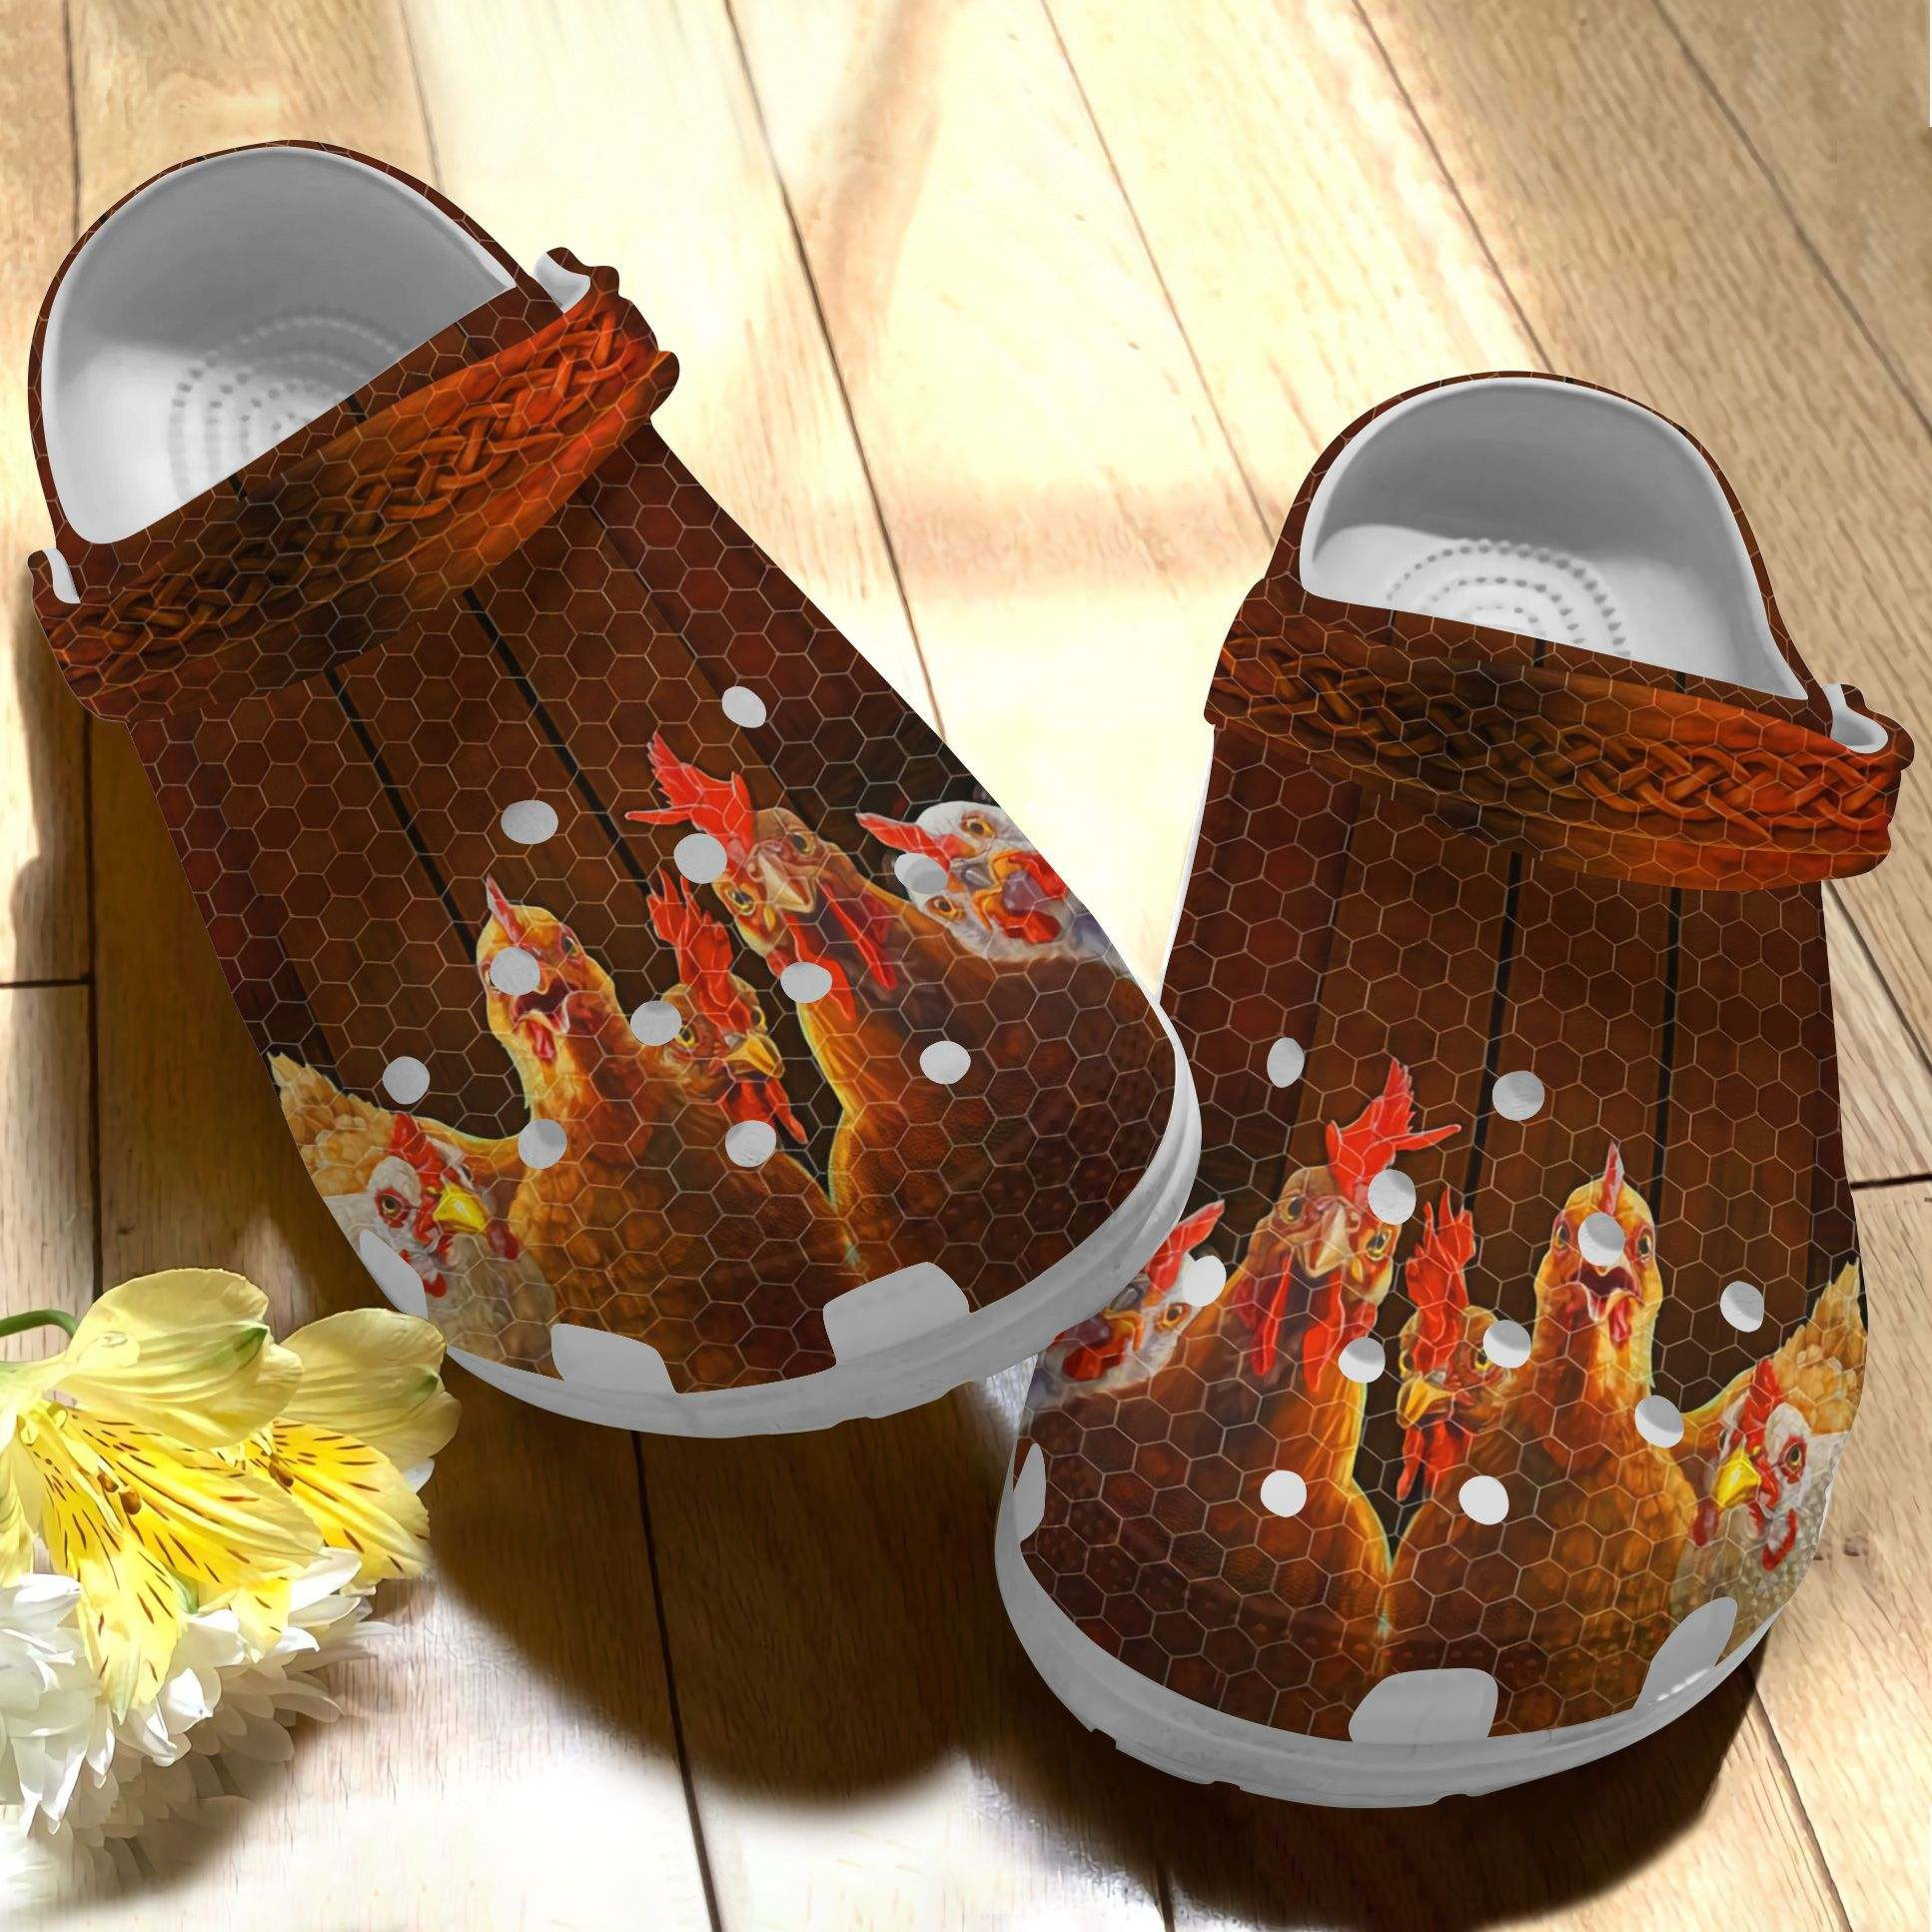 Barn Chicken Custom Crocs Clog Shoes For Mother Day - Chickens Outdoor Crocs Clog Shoes Gifts For Mom Dad